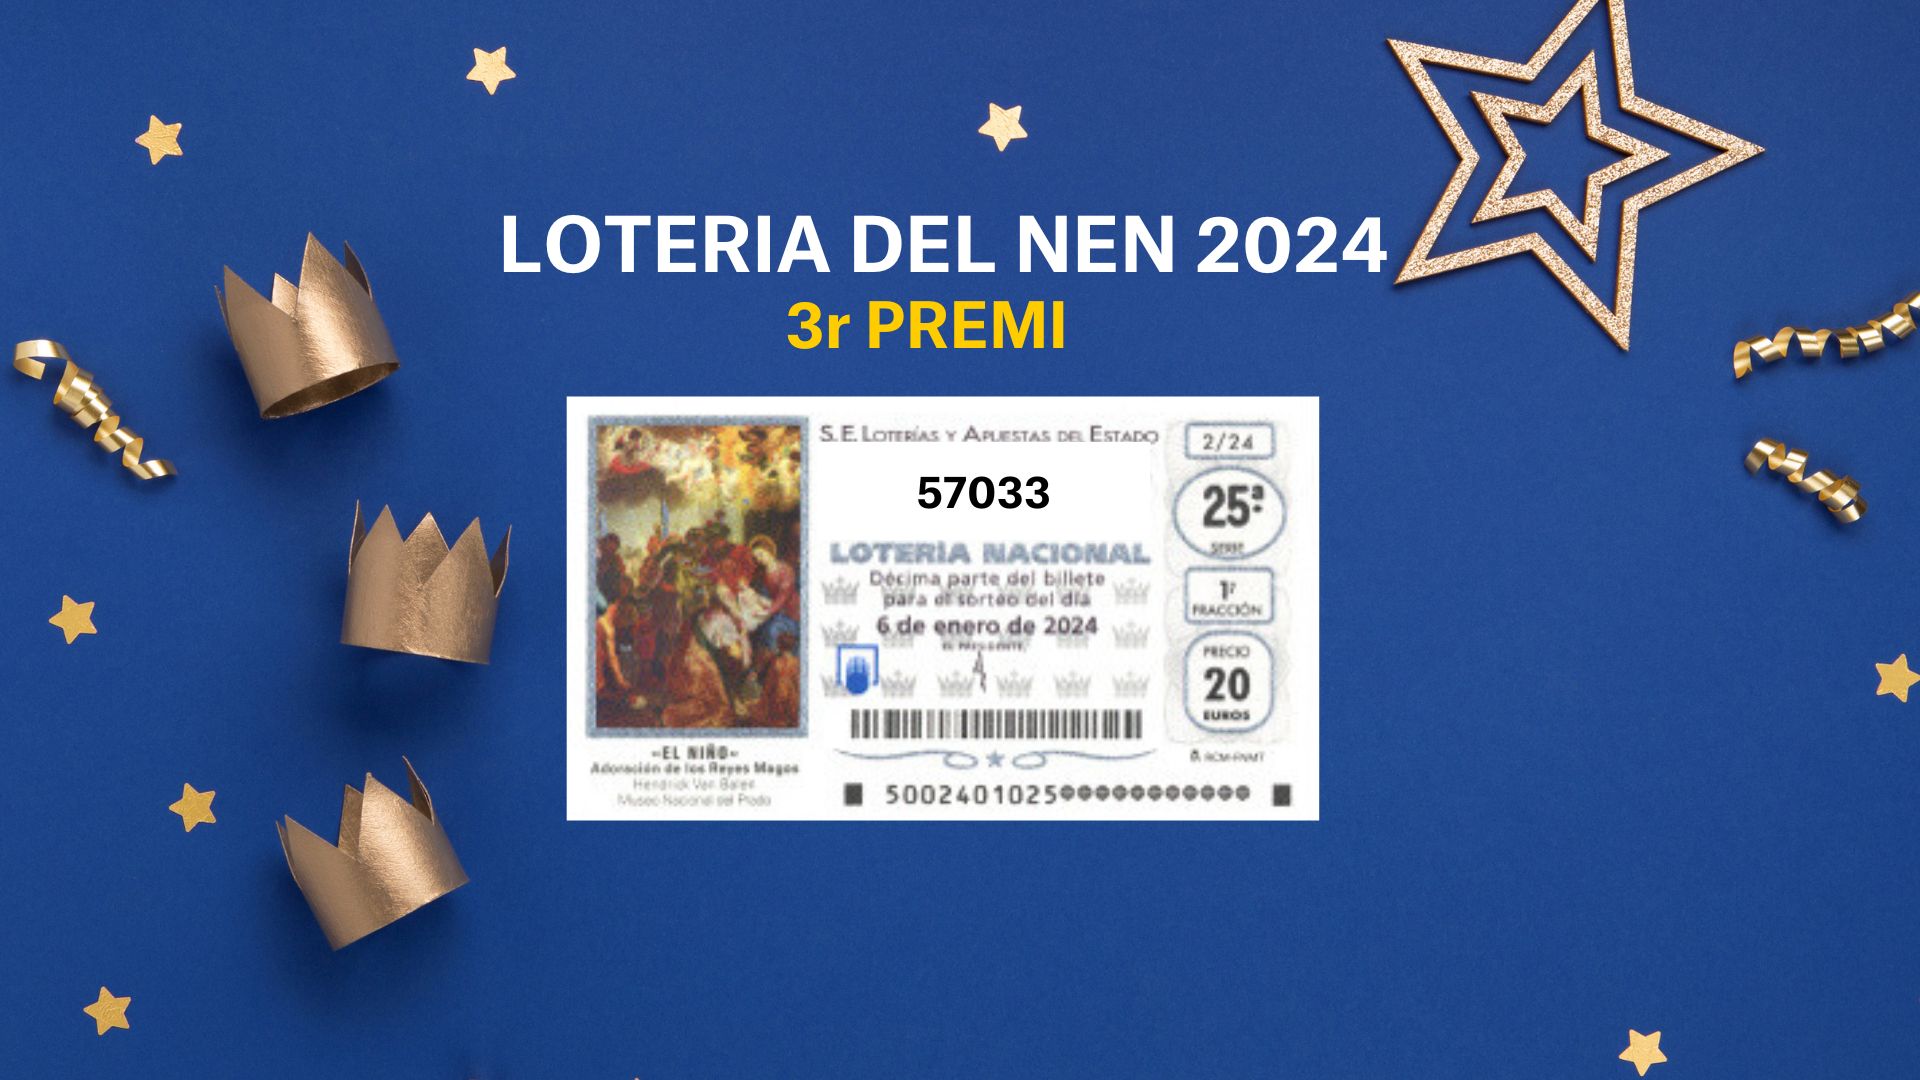 Tercer premi de la Loteria del Nen 2024: 57033